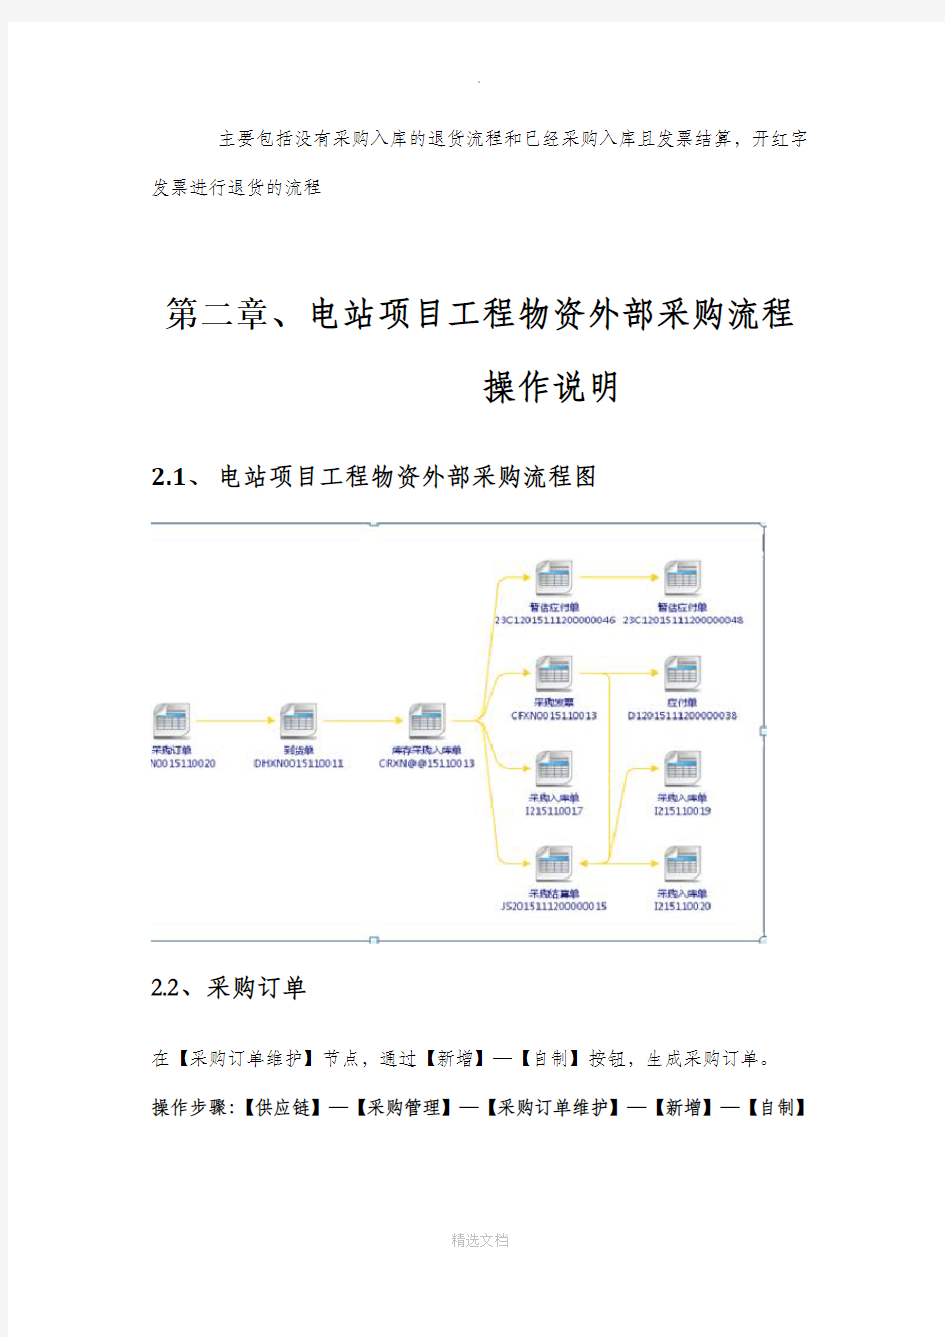 NC系统操作手册(采购管理)V3.0